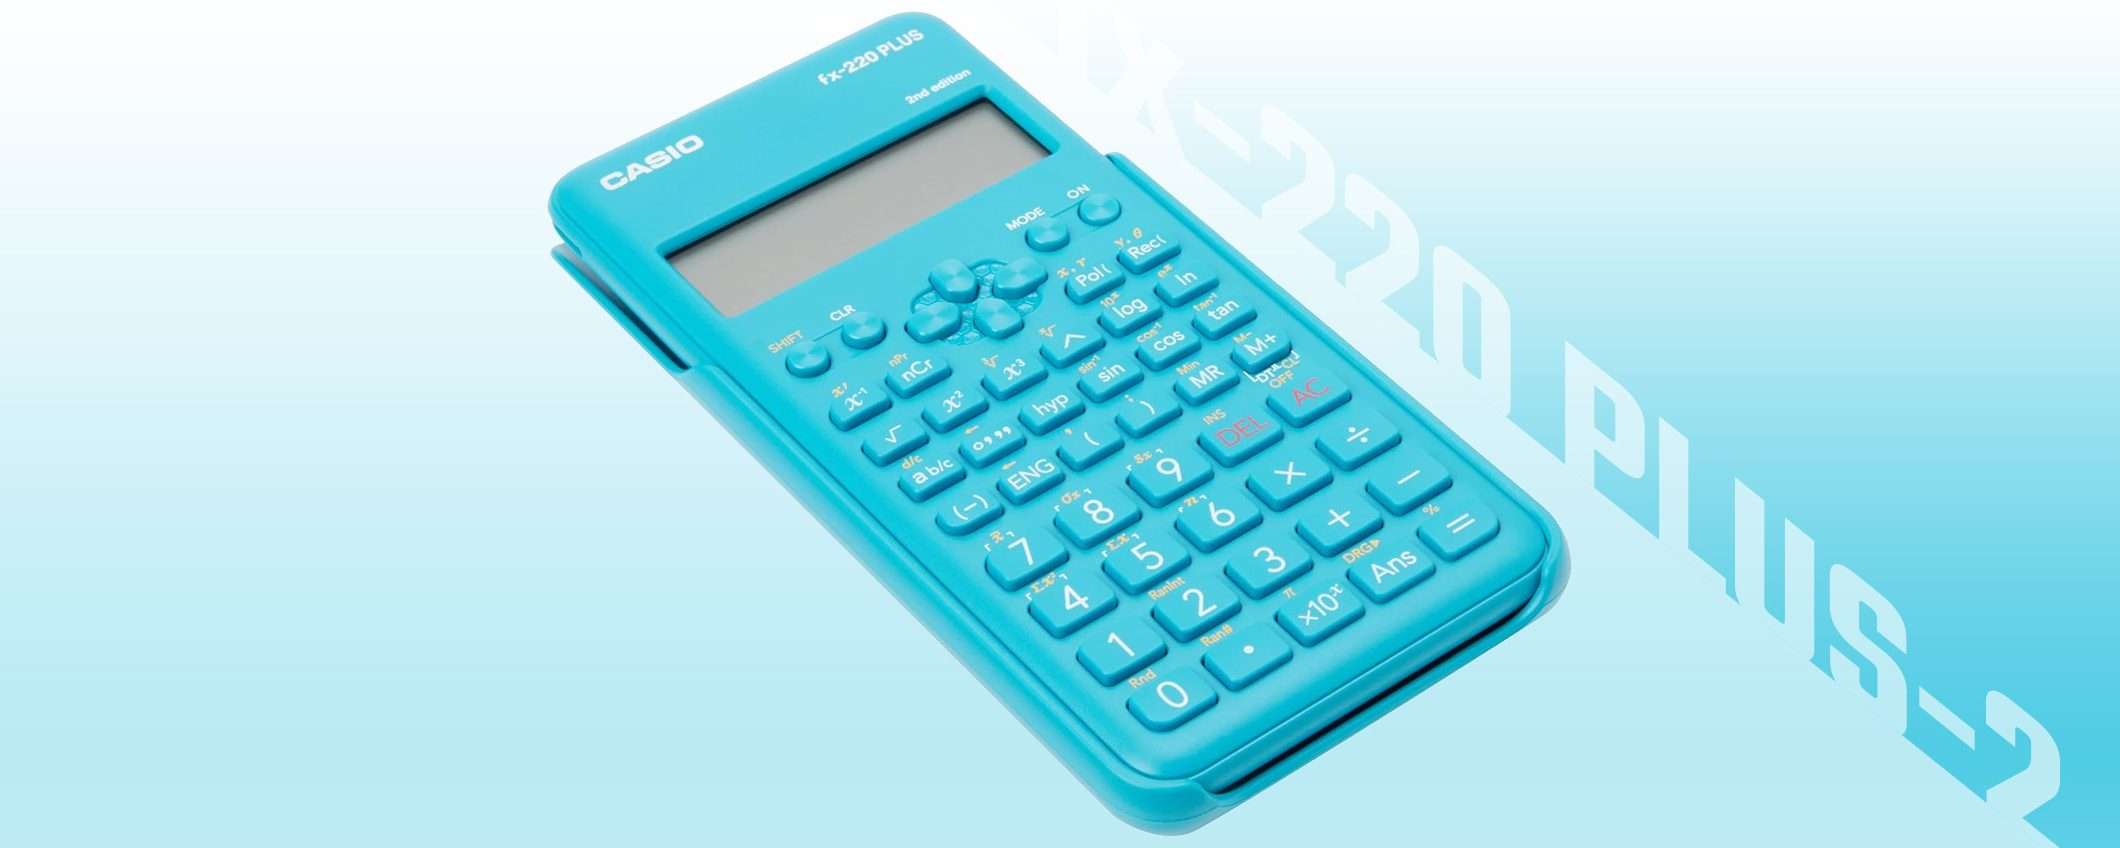 CASIO fx-220 PLUS-2: calcolatrice scientifica a soli 8,99€